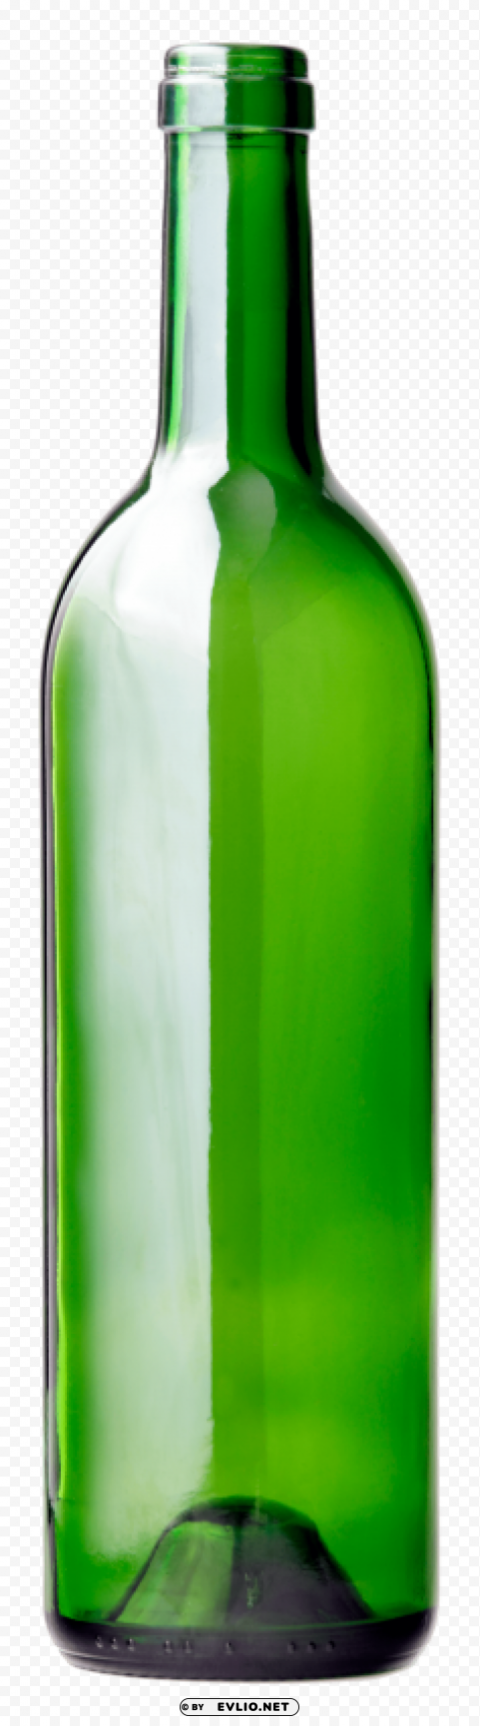 Transparent Background PNG of bottle Free PNG images with transparent background - Image ID 71e38c76